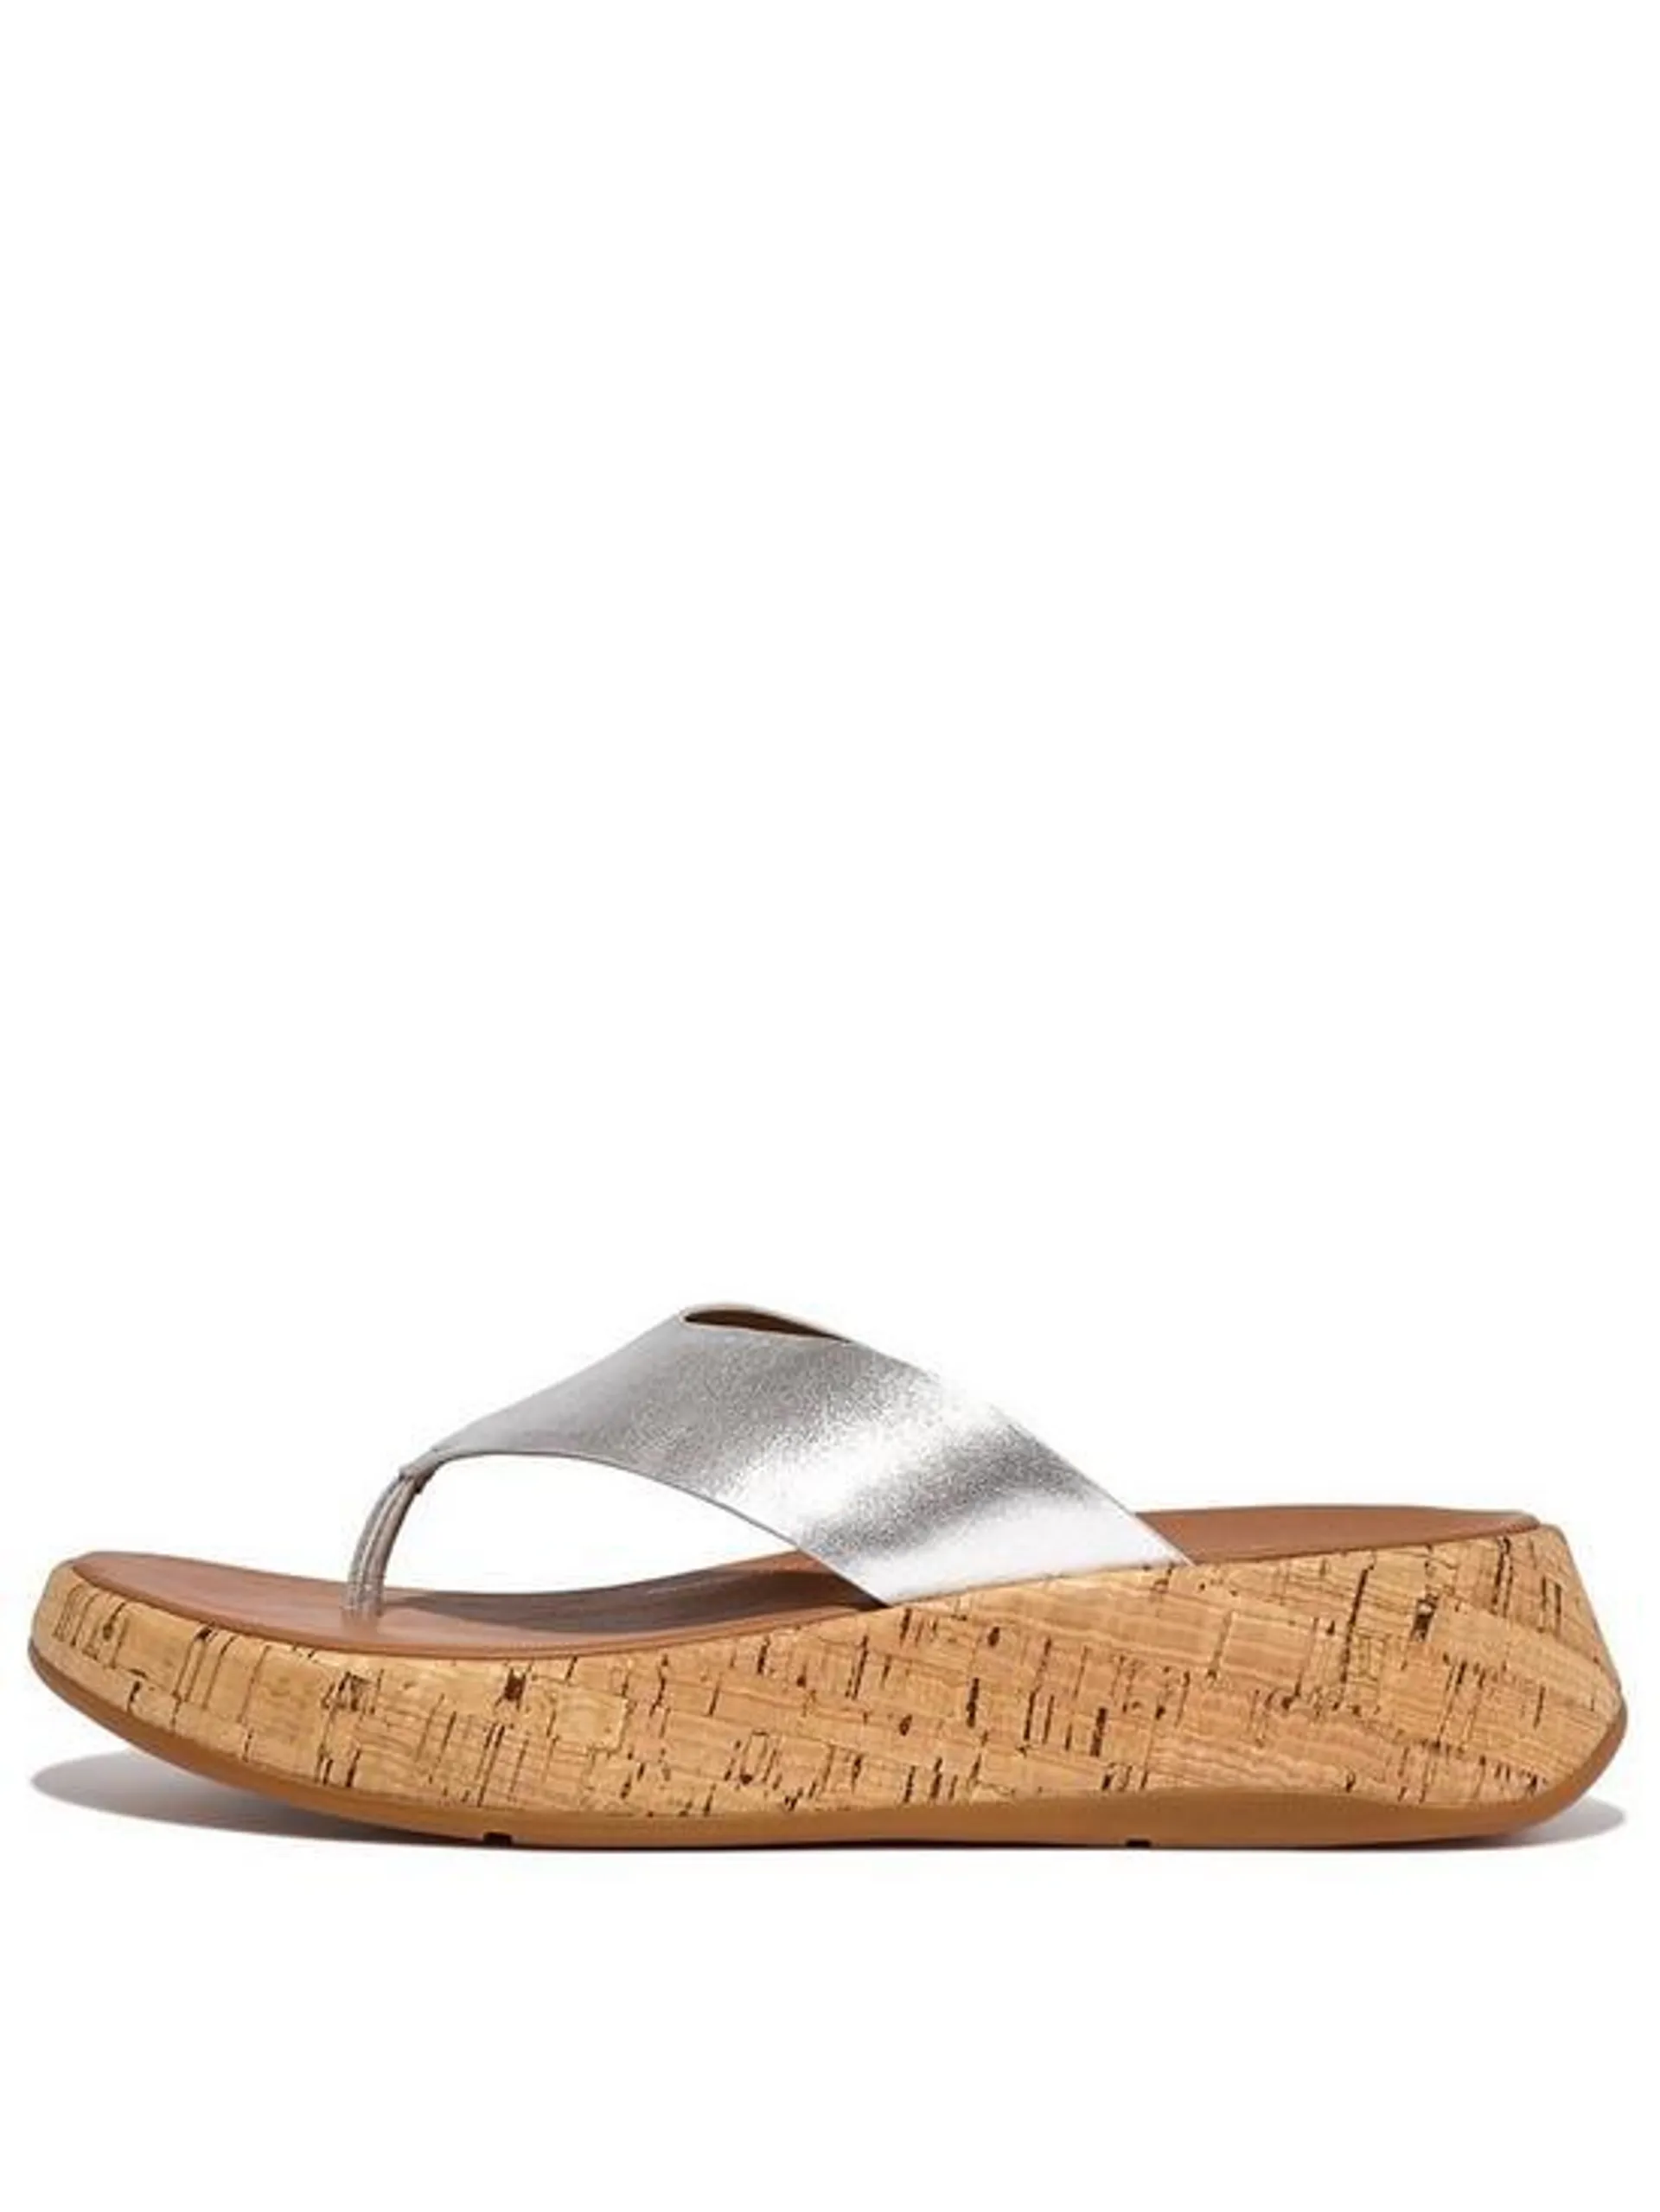 F-mode Leather Cork Flatform Toe-post Sandals - Silver